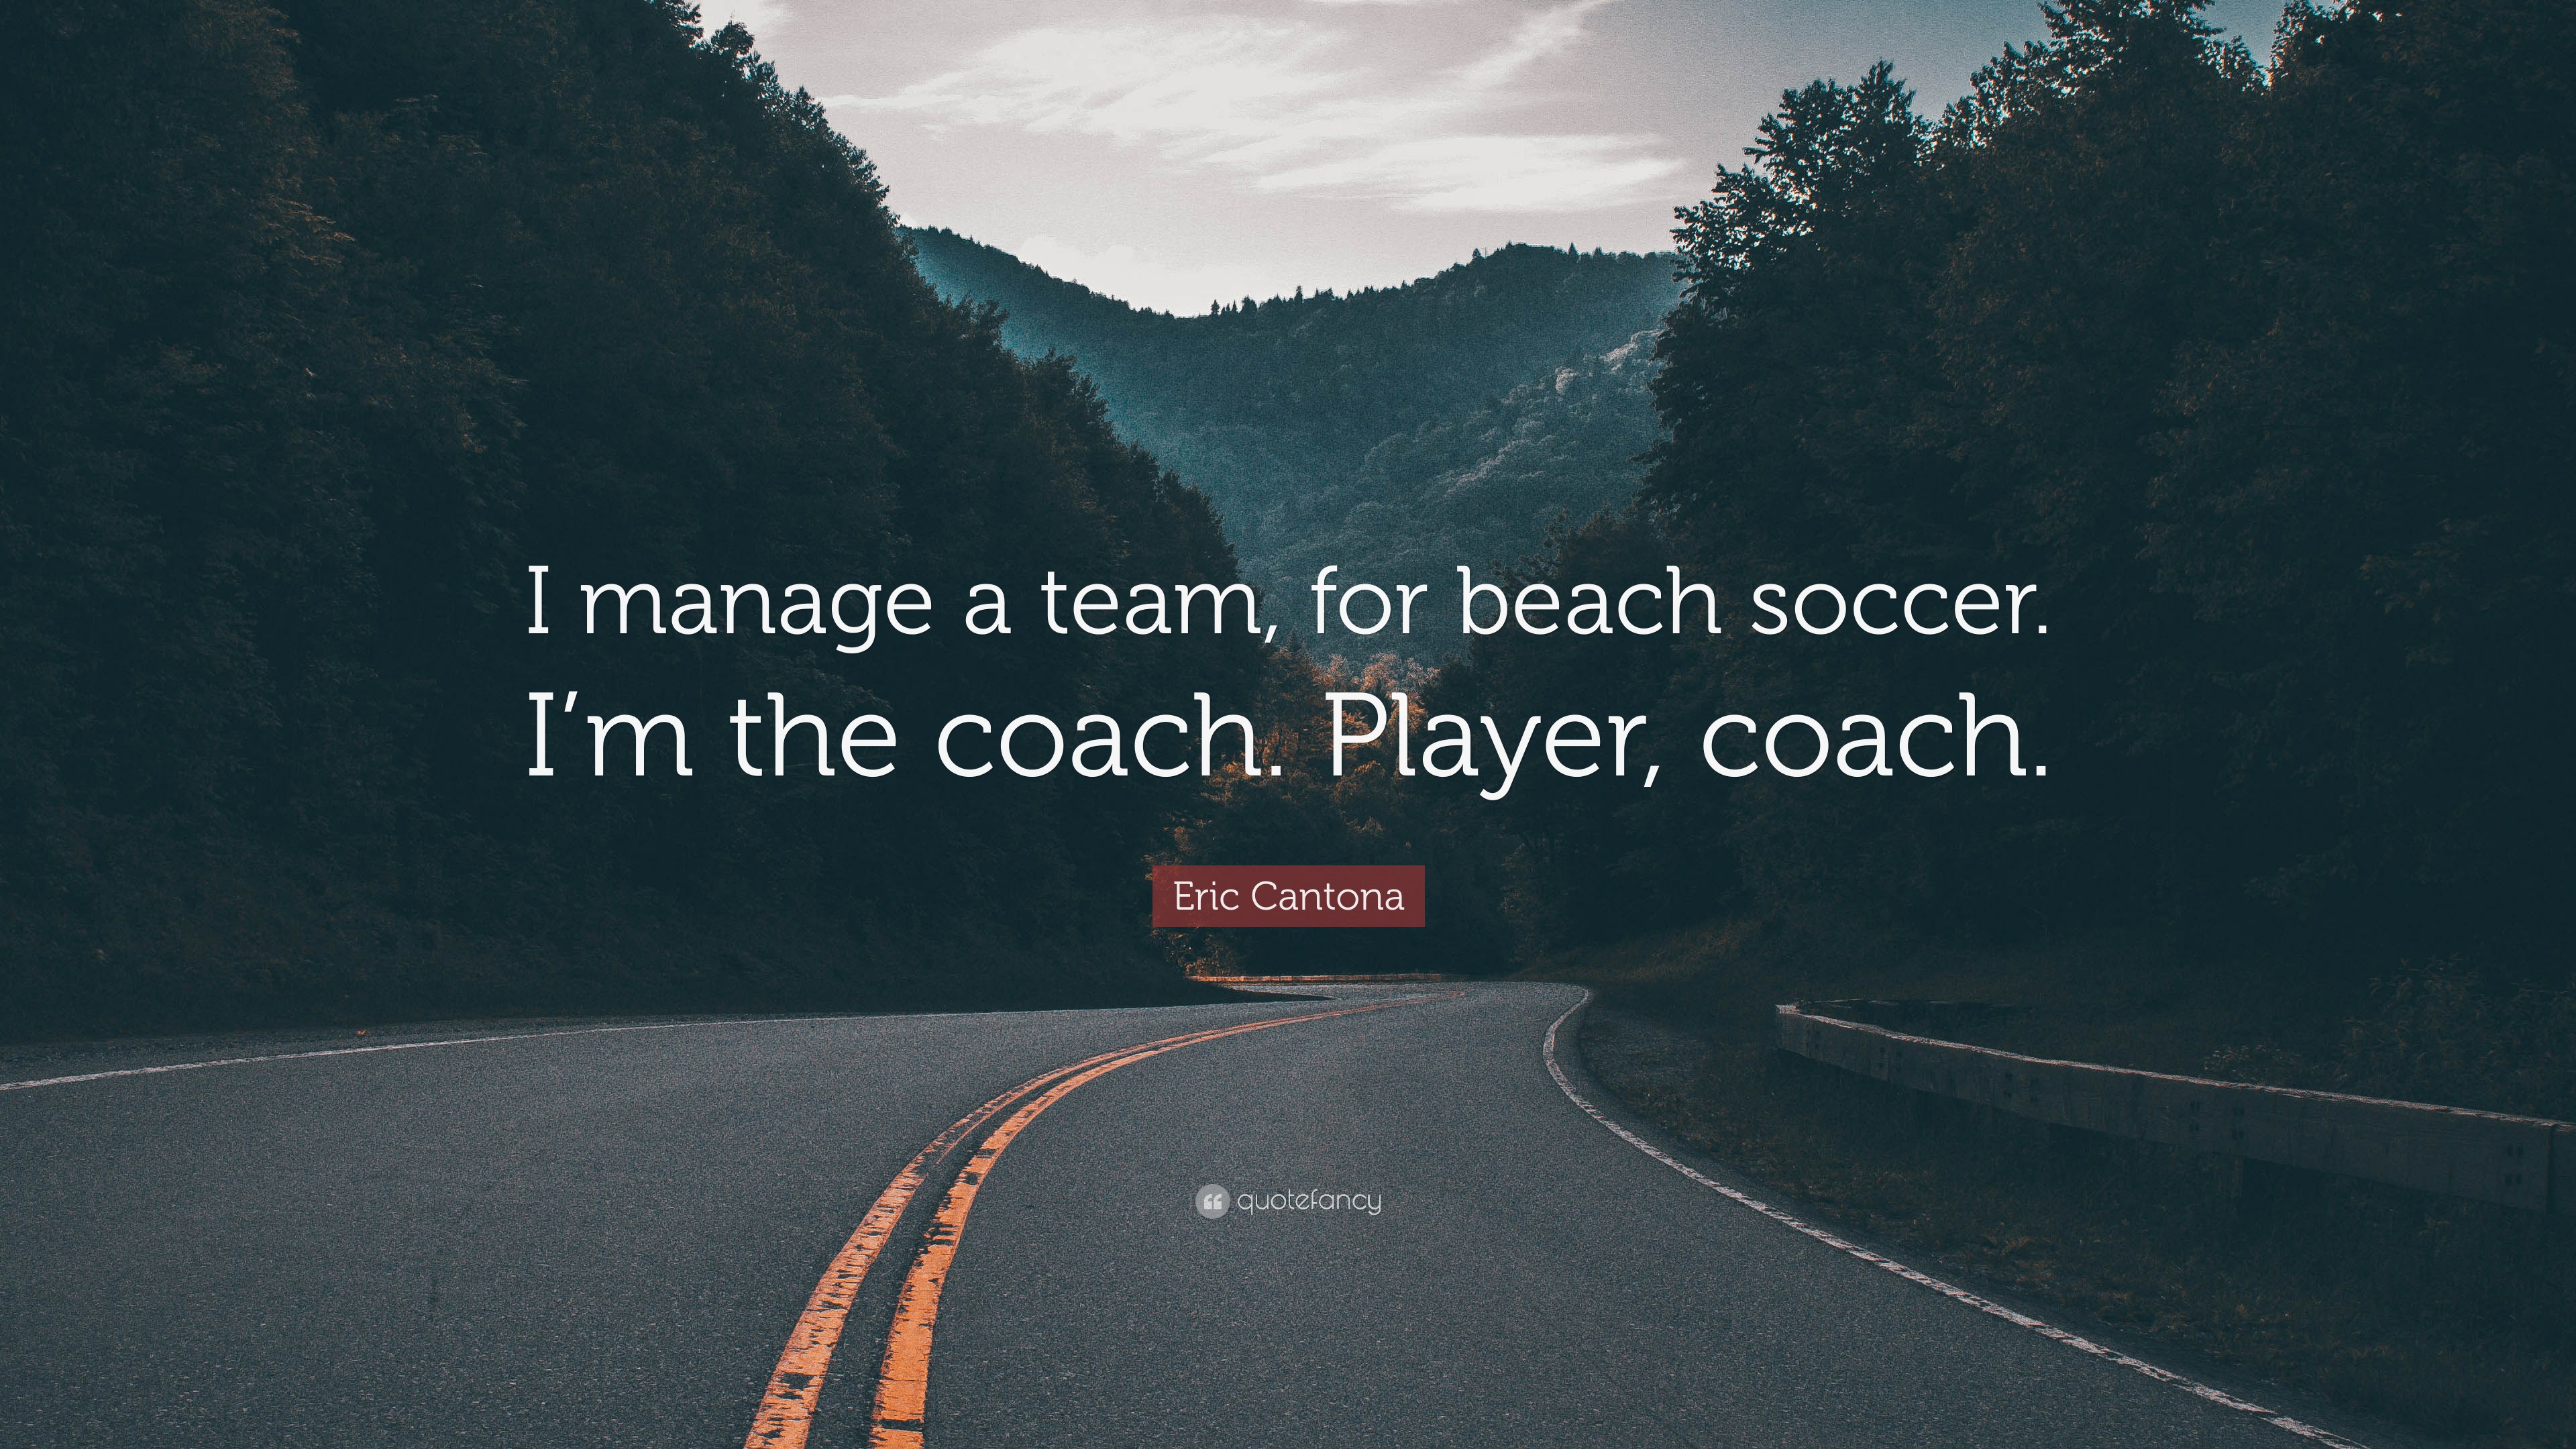 Eric Cantona Quote: “I manage a team, for beach soccer. I'm the coach.  Player, coach.”